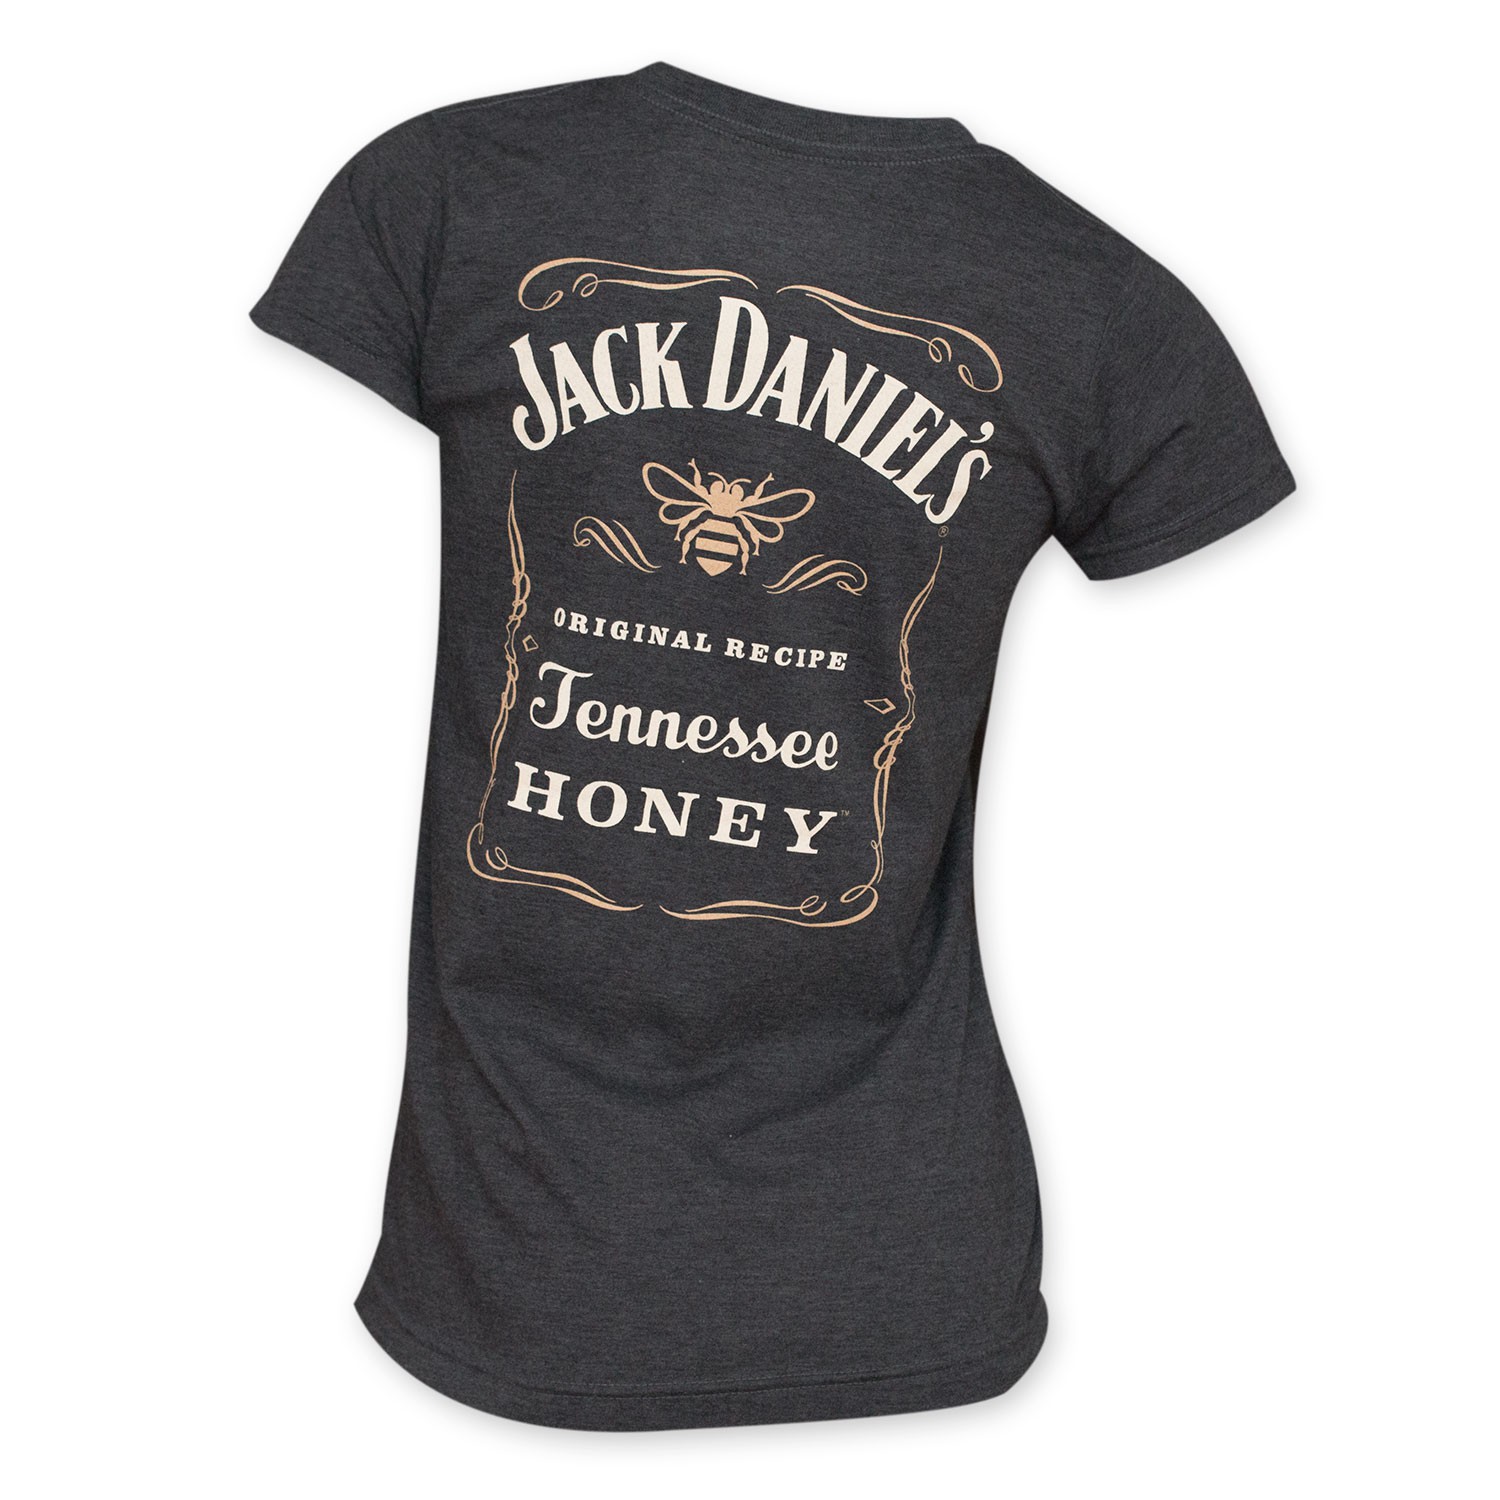 Jack Daniels Women's Black Tennessee Honey Tee Shirt